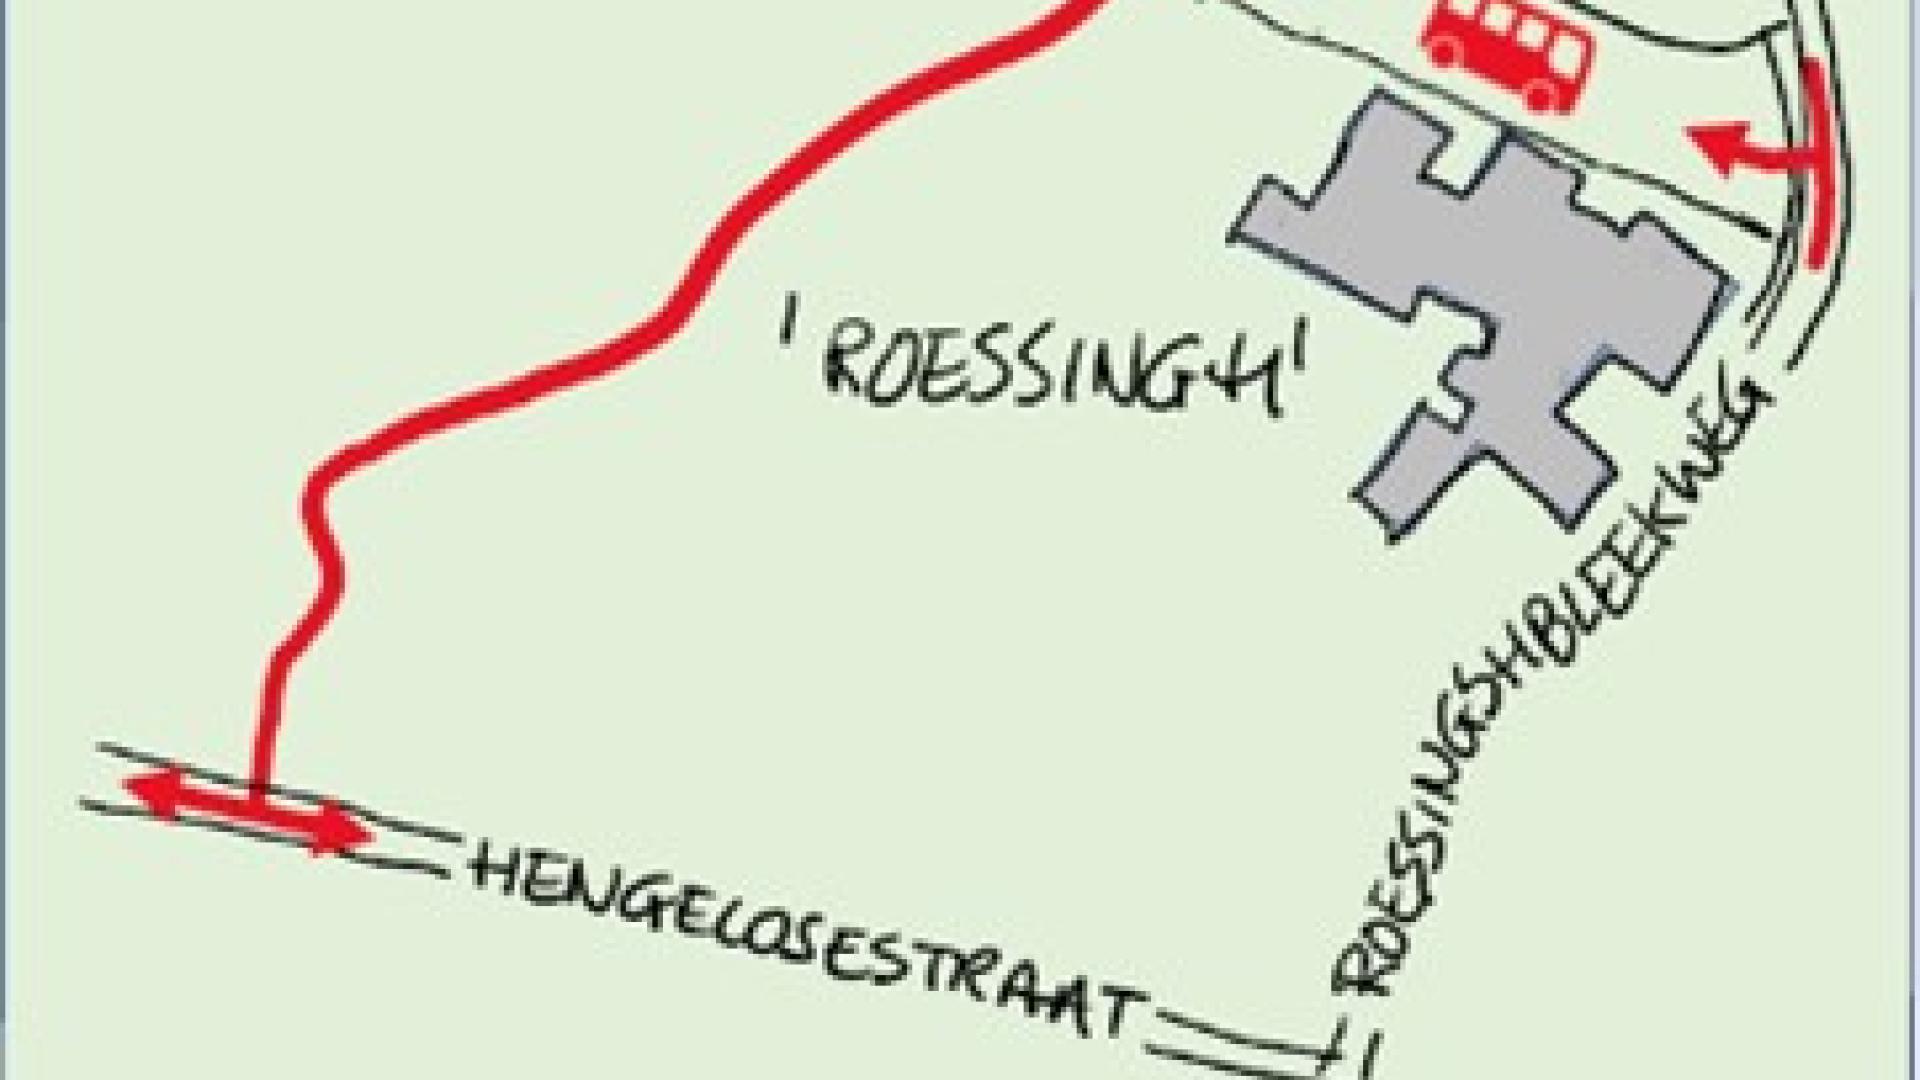 Roessingh